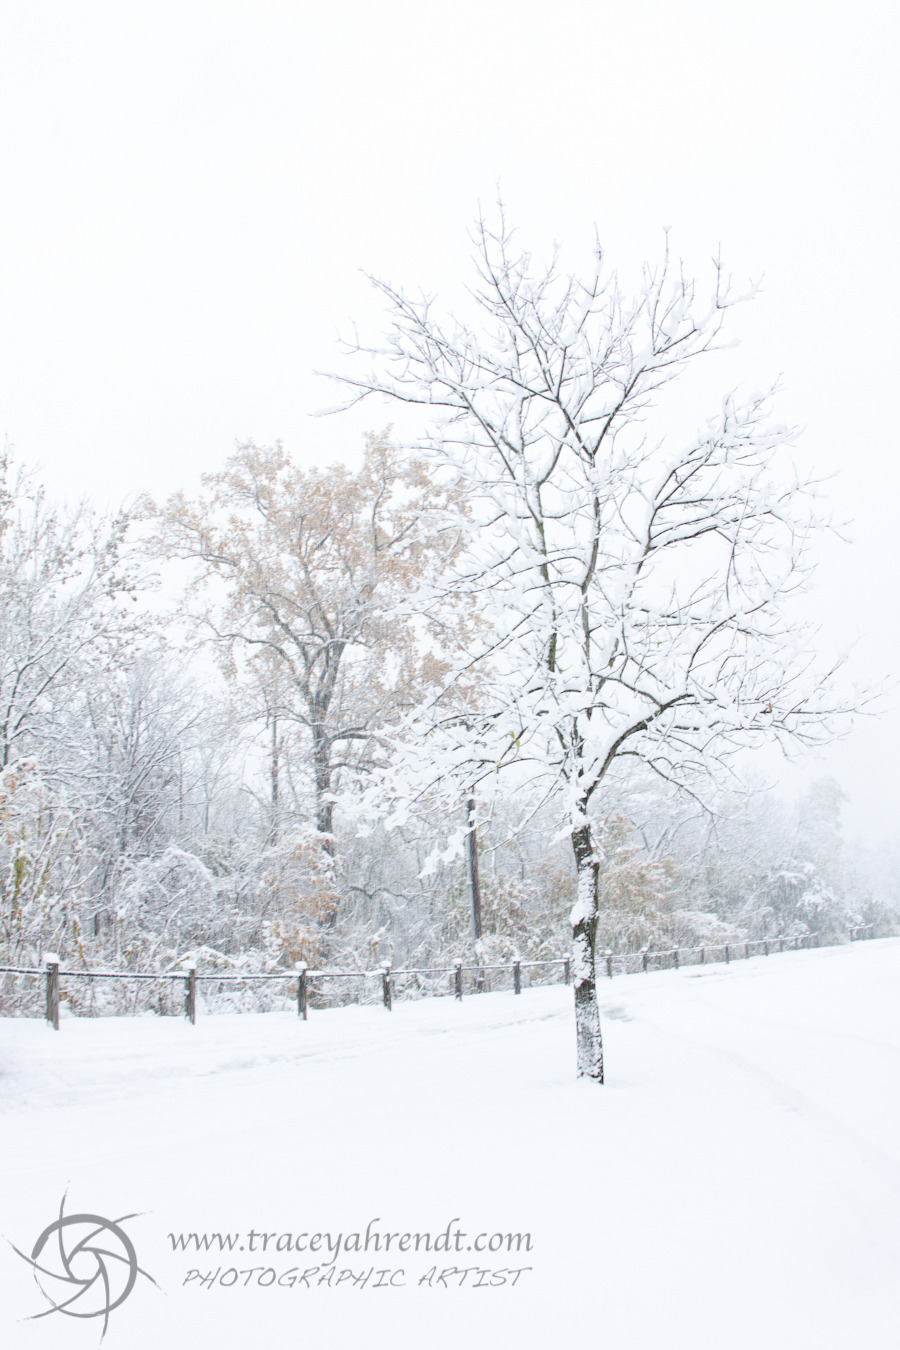 Tracey Ahrendt Photographic Artist Winter landscape 